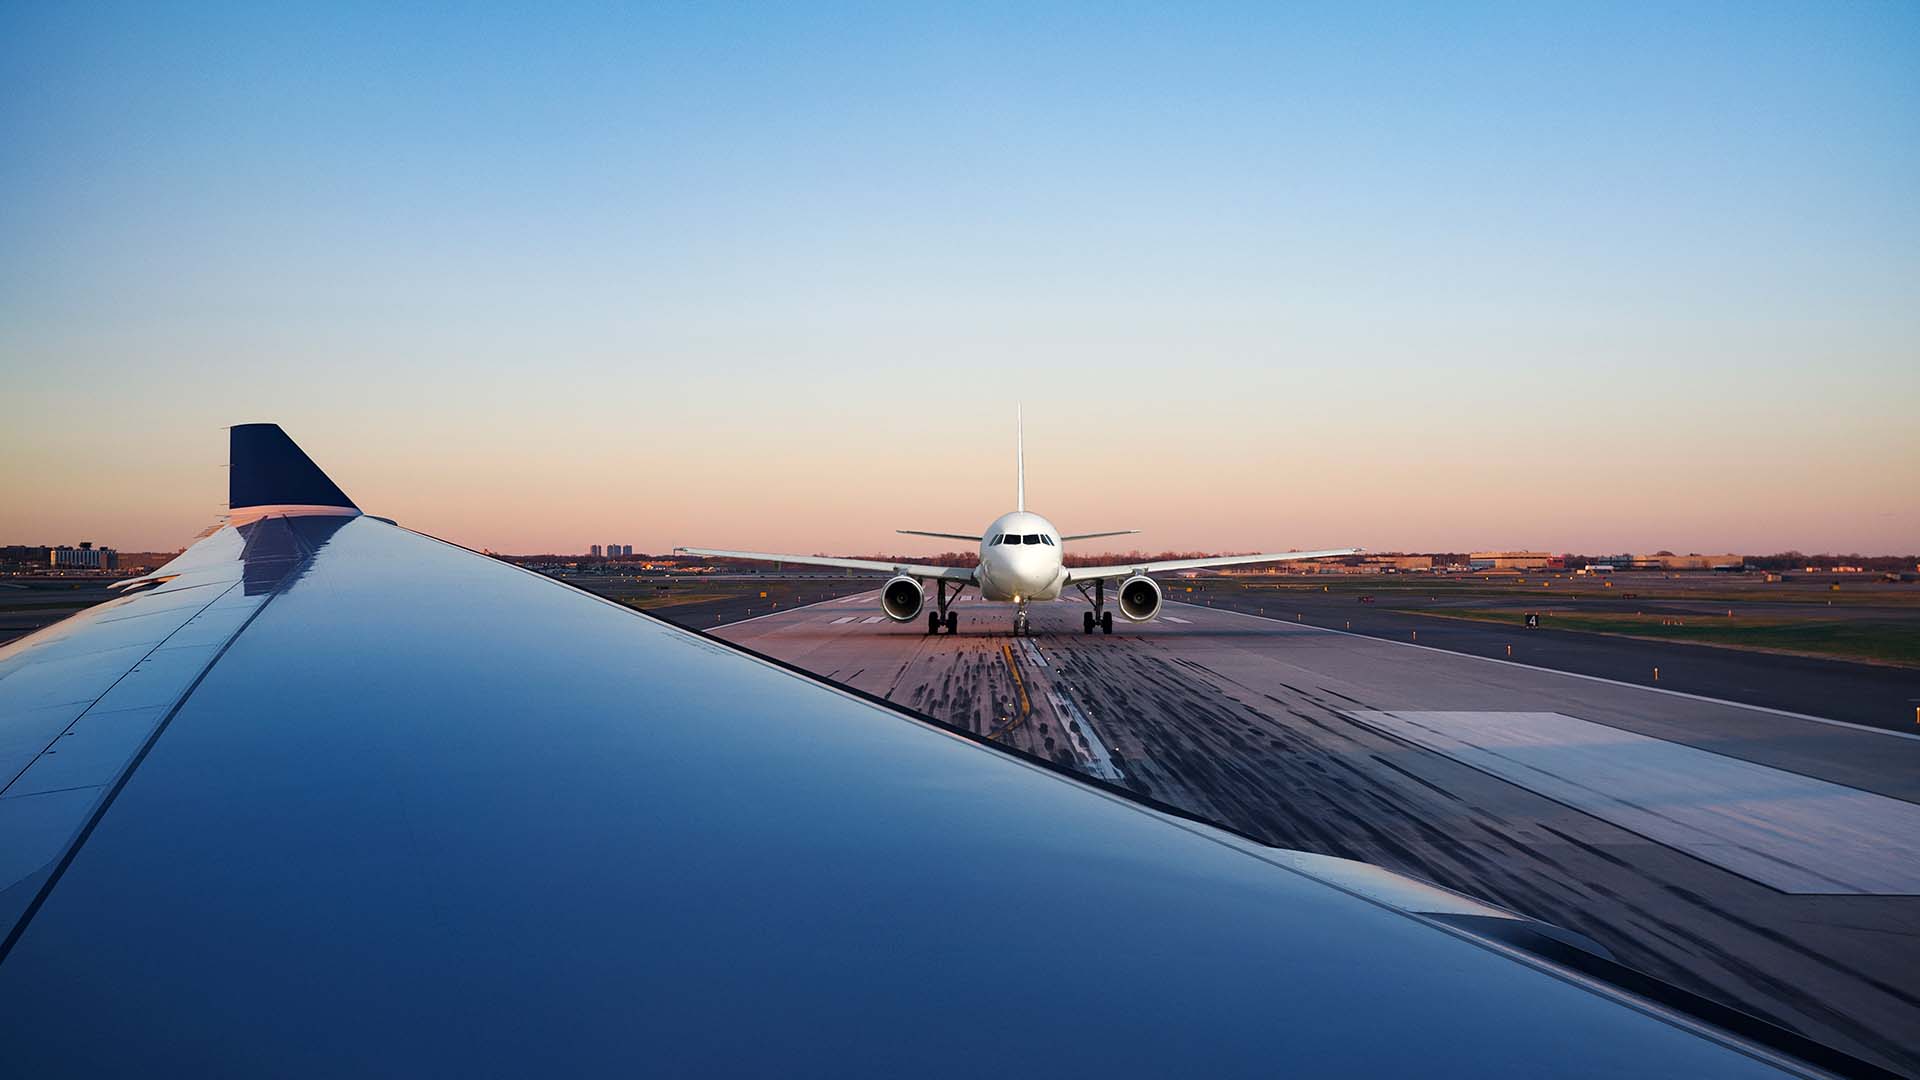 Airbus A320 at airport runway - wing view